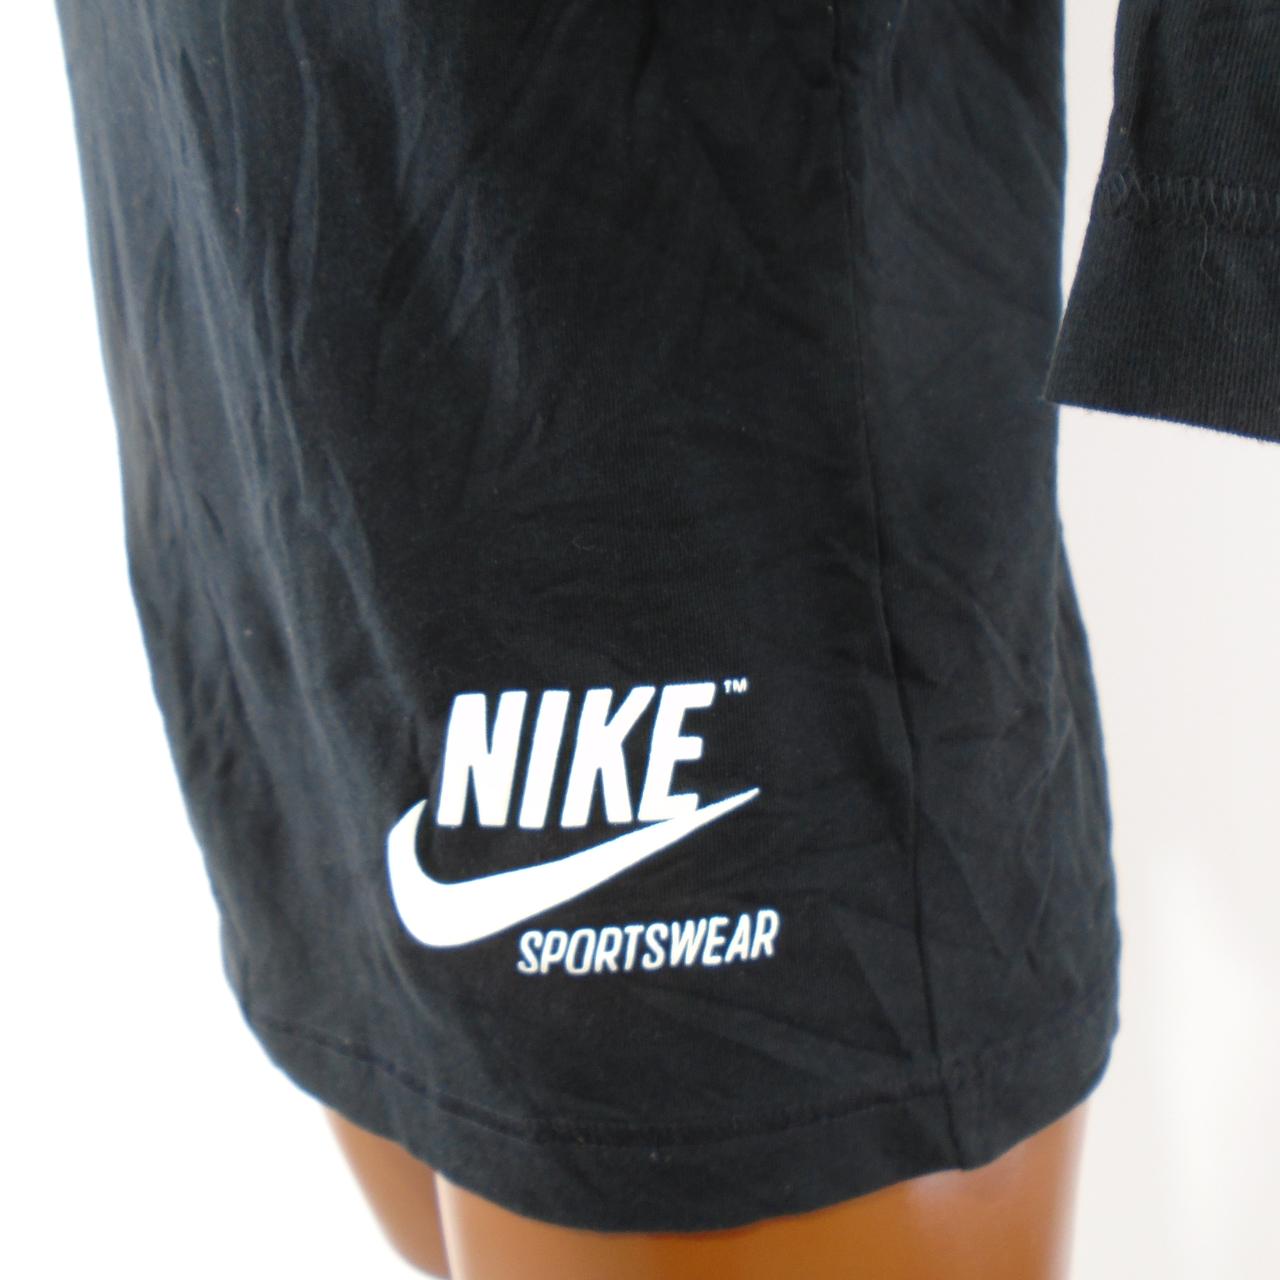 Camiseta Mujer Nike.  Negro.  XS.  Usó.  Muy bien